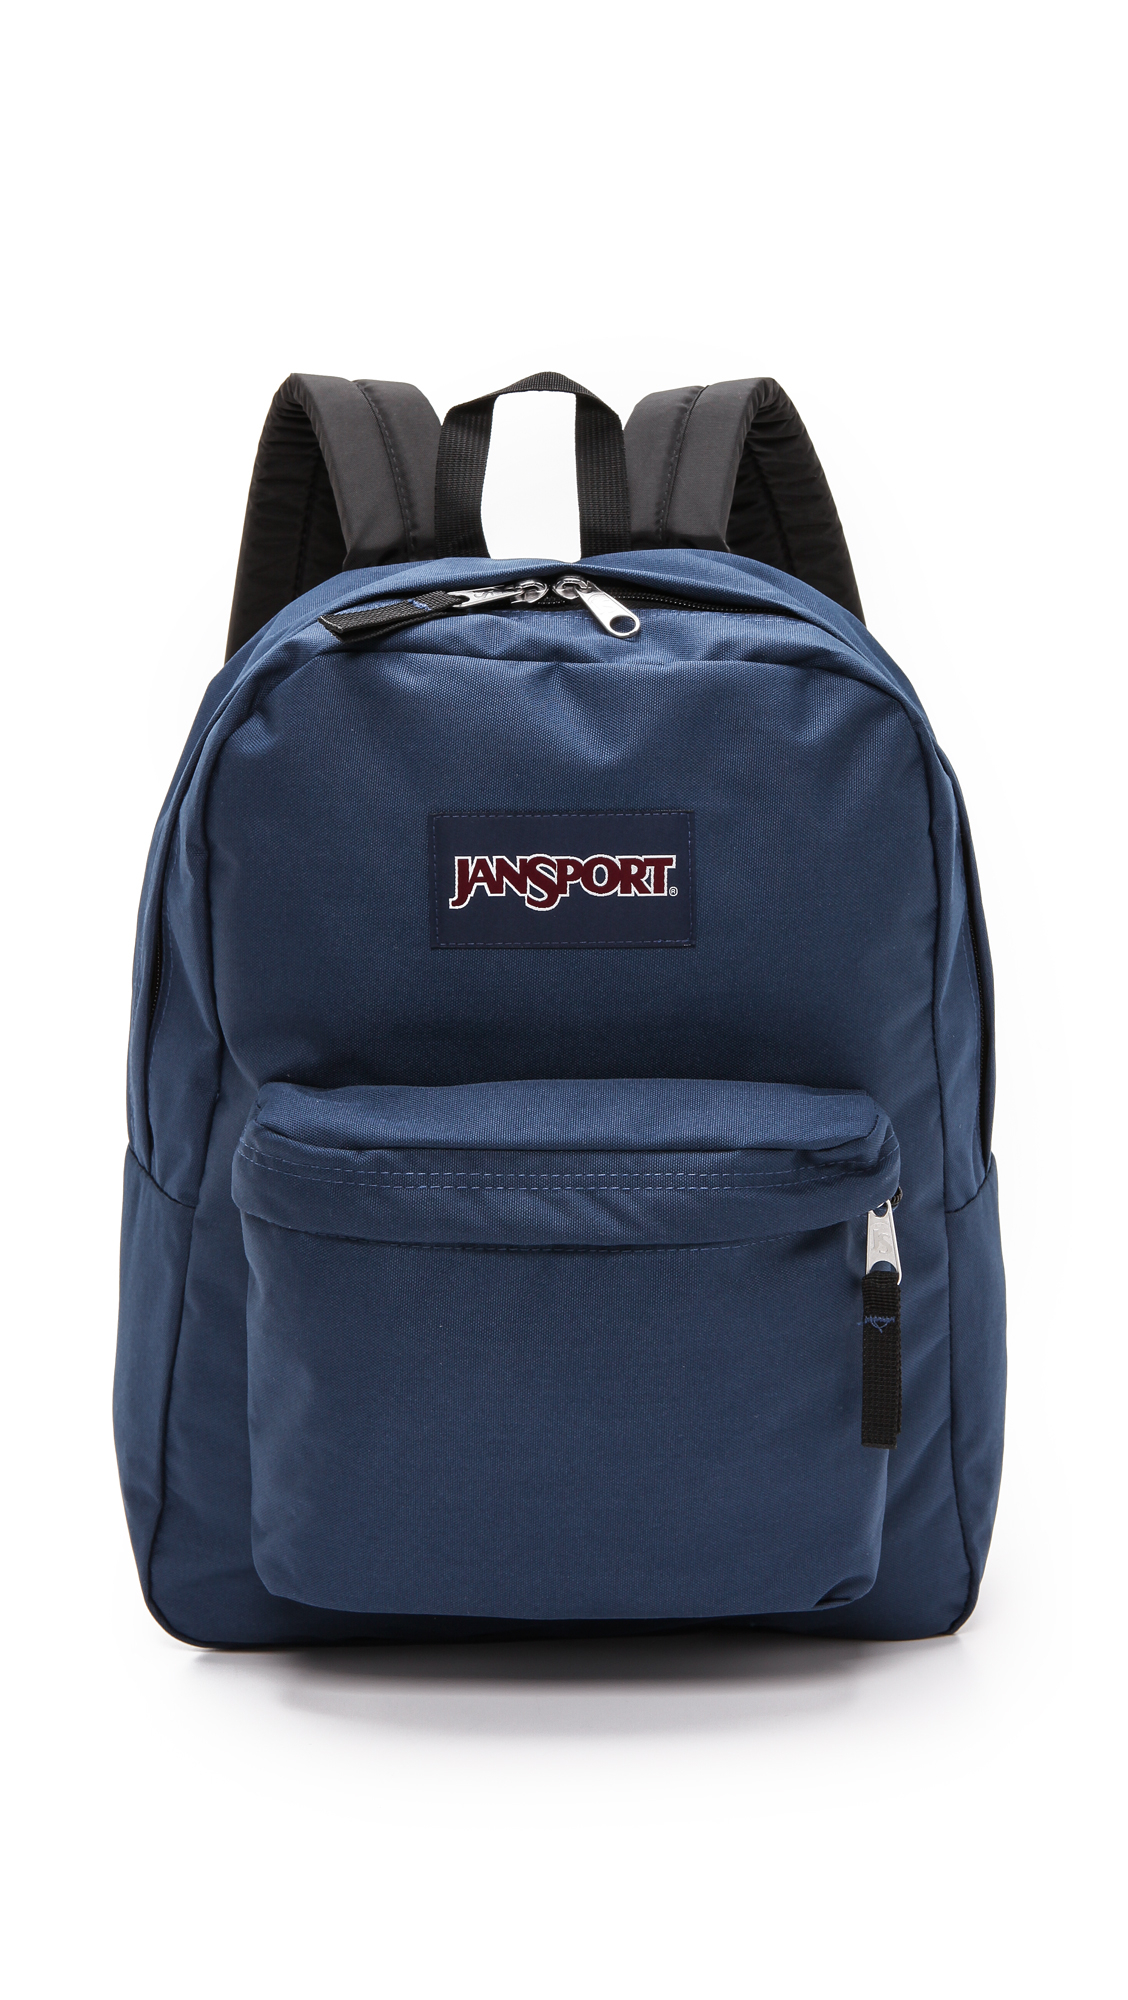 Lyst - Jansport Classic Superbreak Backpack - Navy in Blue